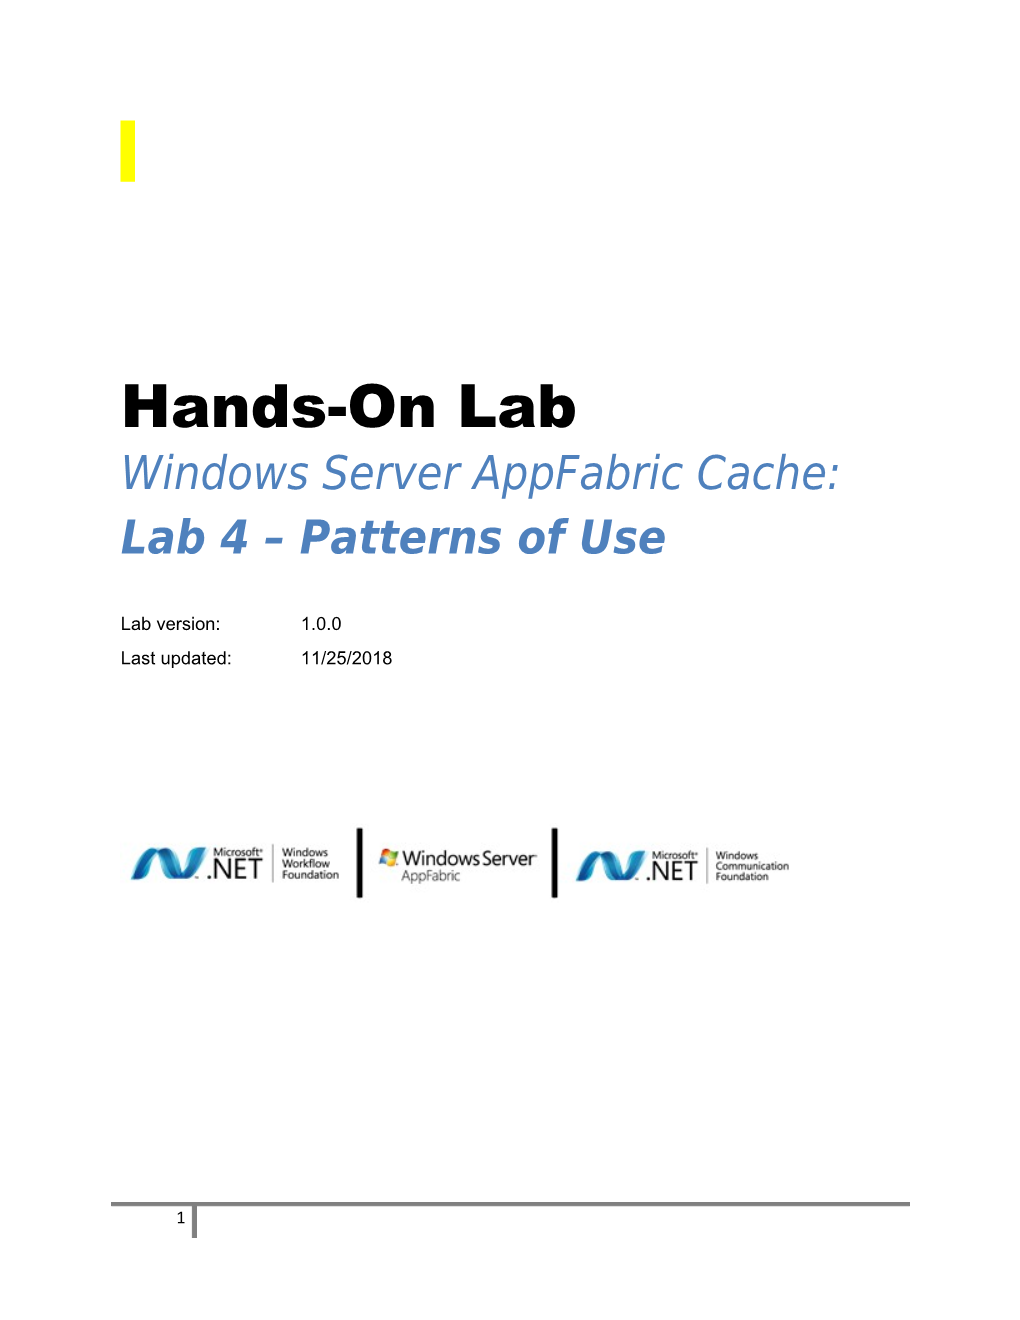 Windows Server Appfabric Cache